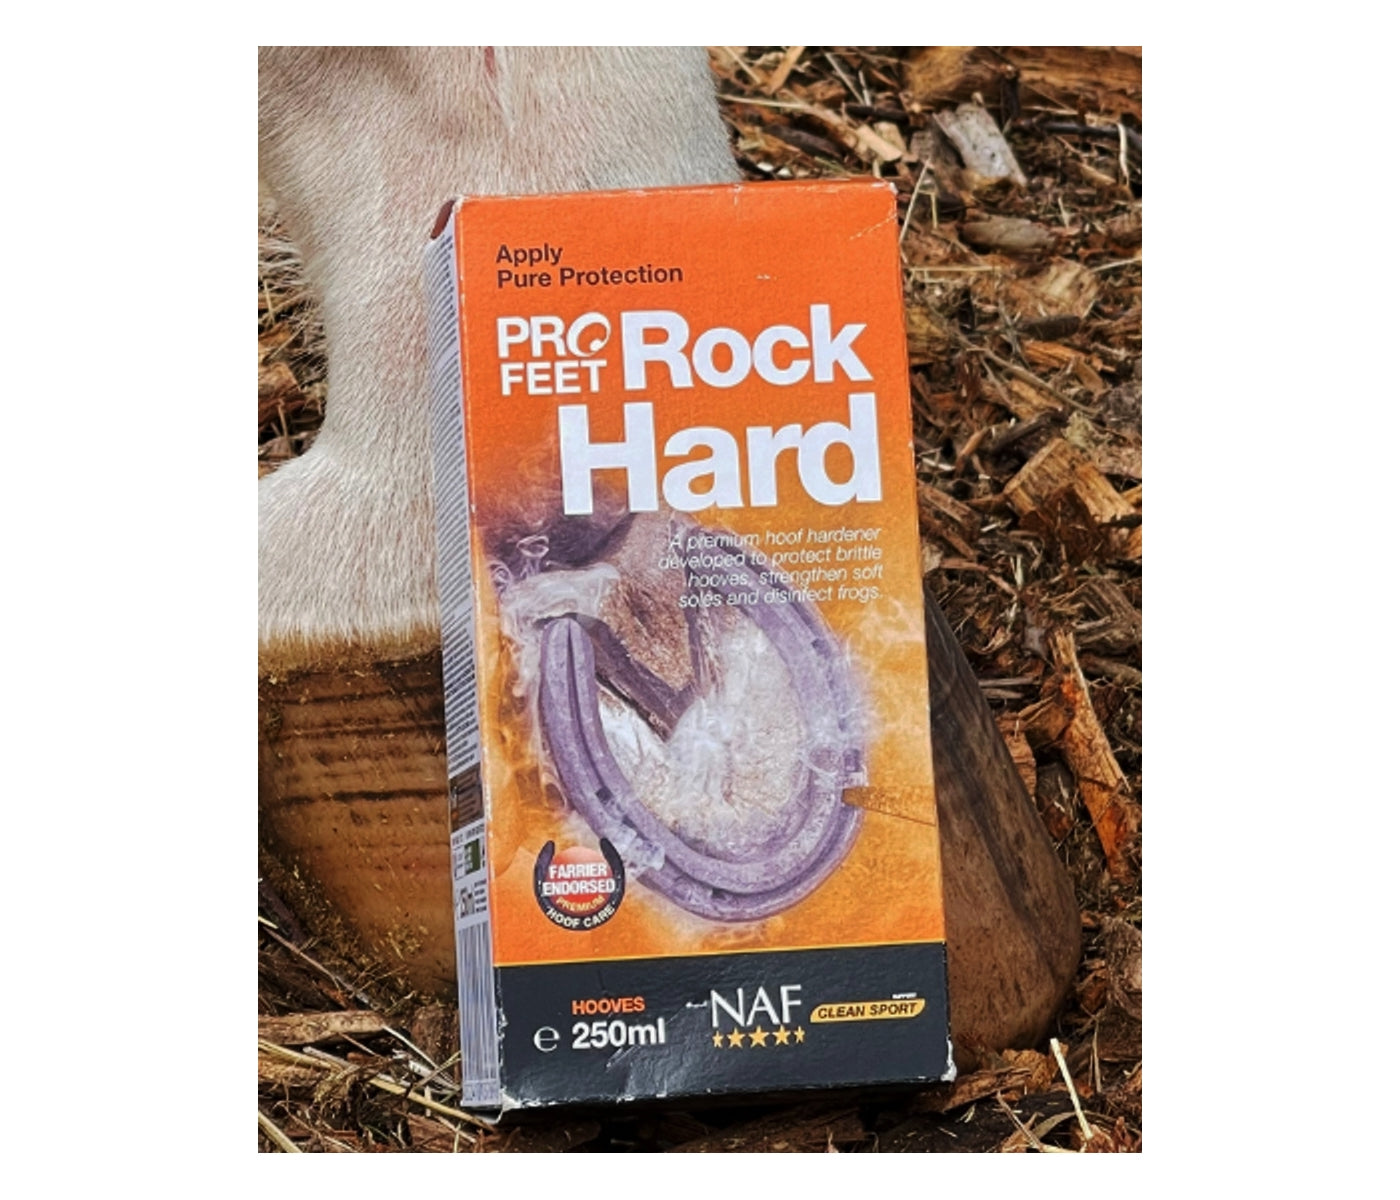 NAF - Profeet Rock Hard 250ml | Hoof Care - Buy Online SPR Centre UK